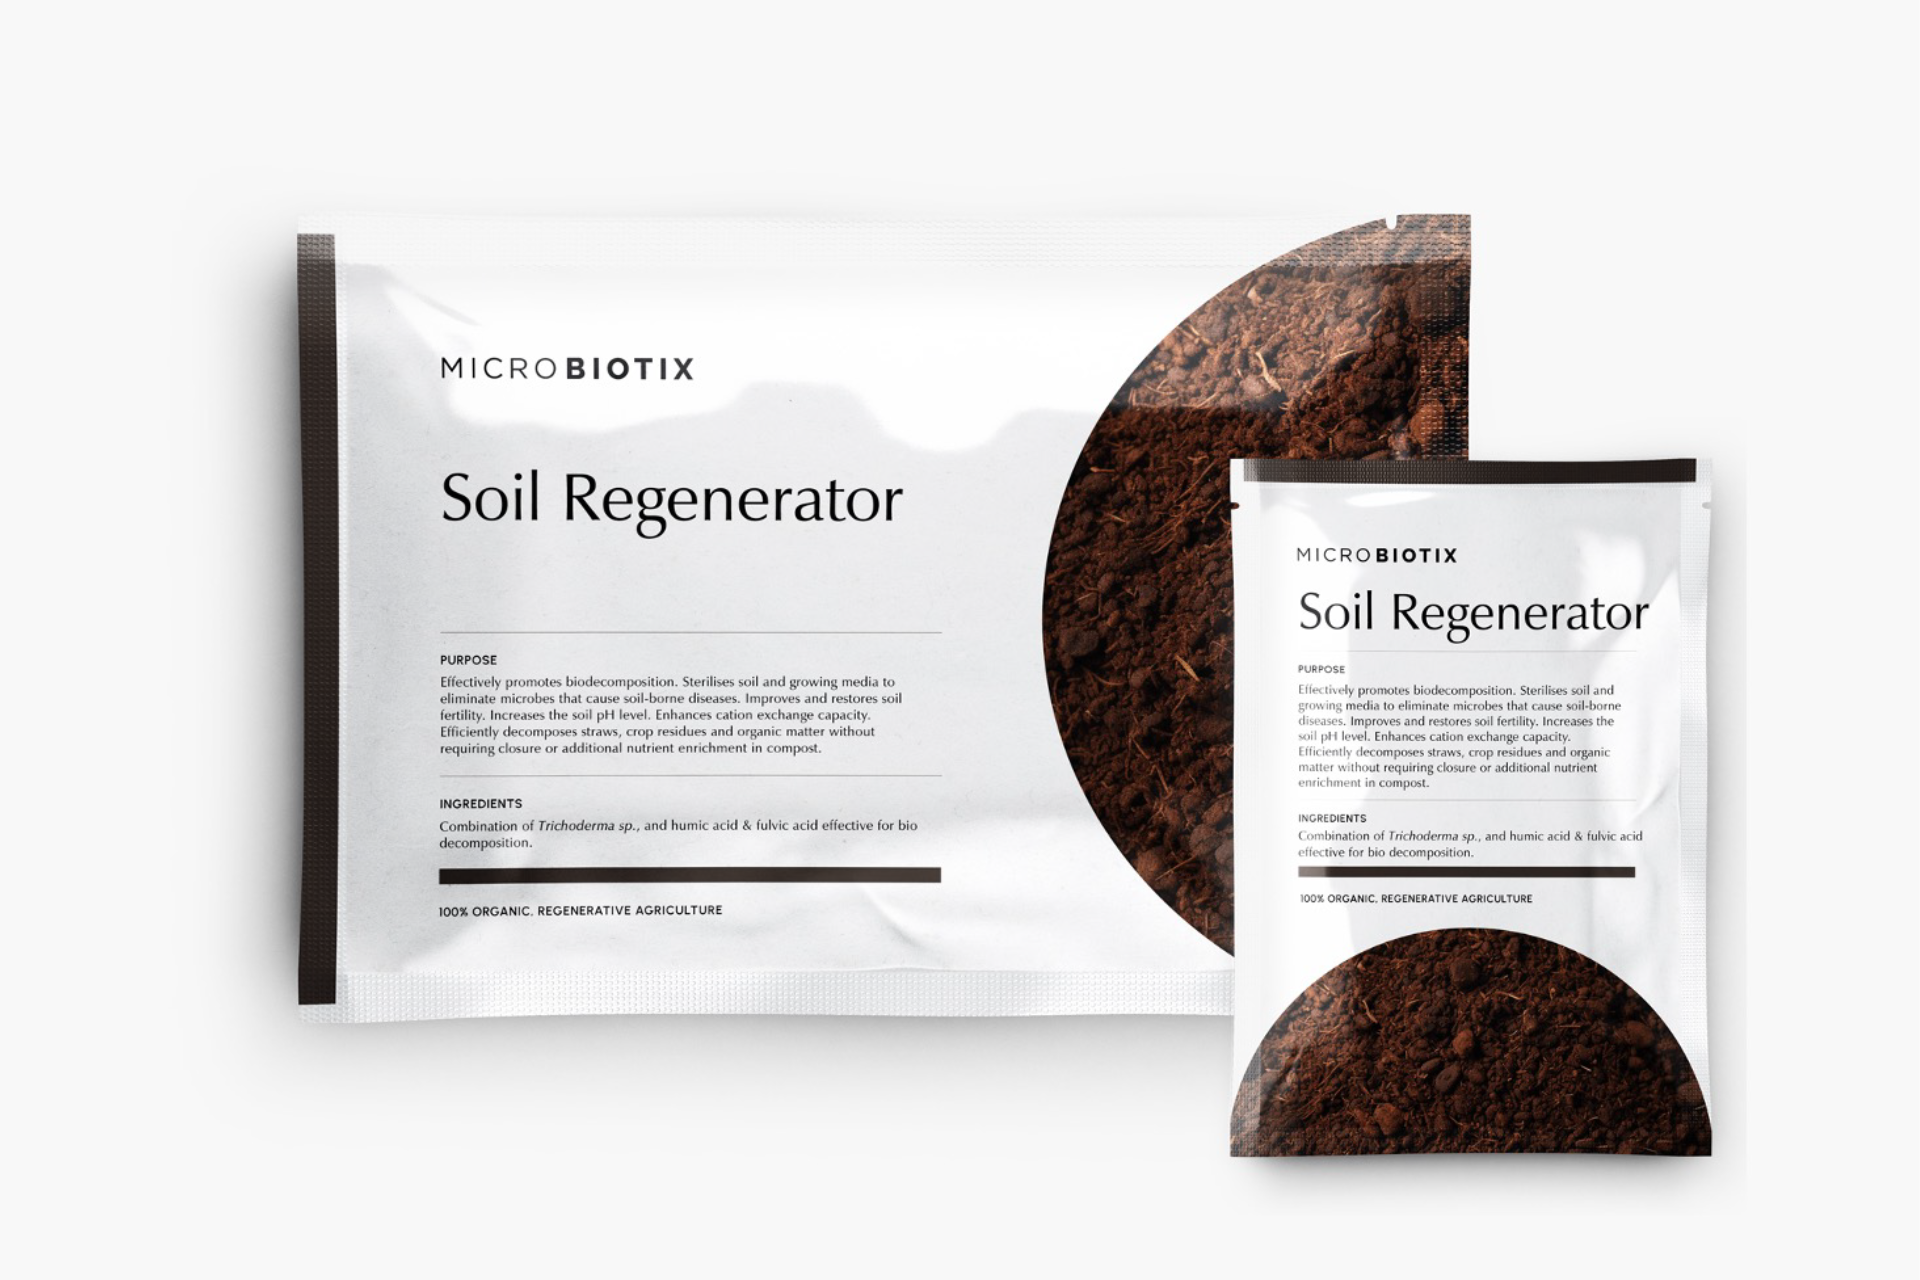 MicroBiotix Soil Regenerator biological soil conditioning